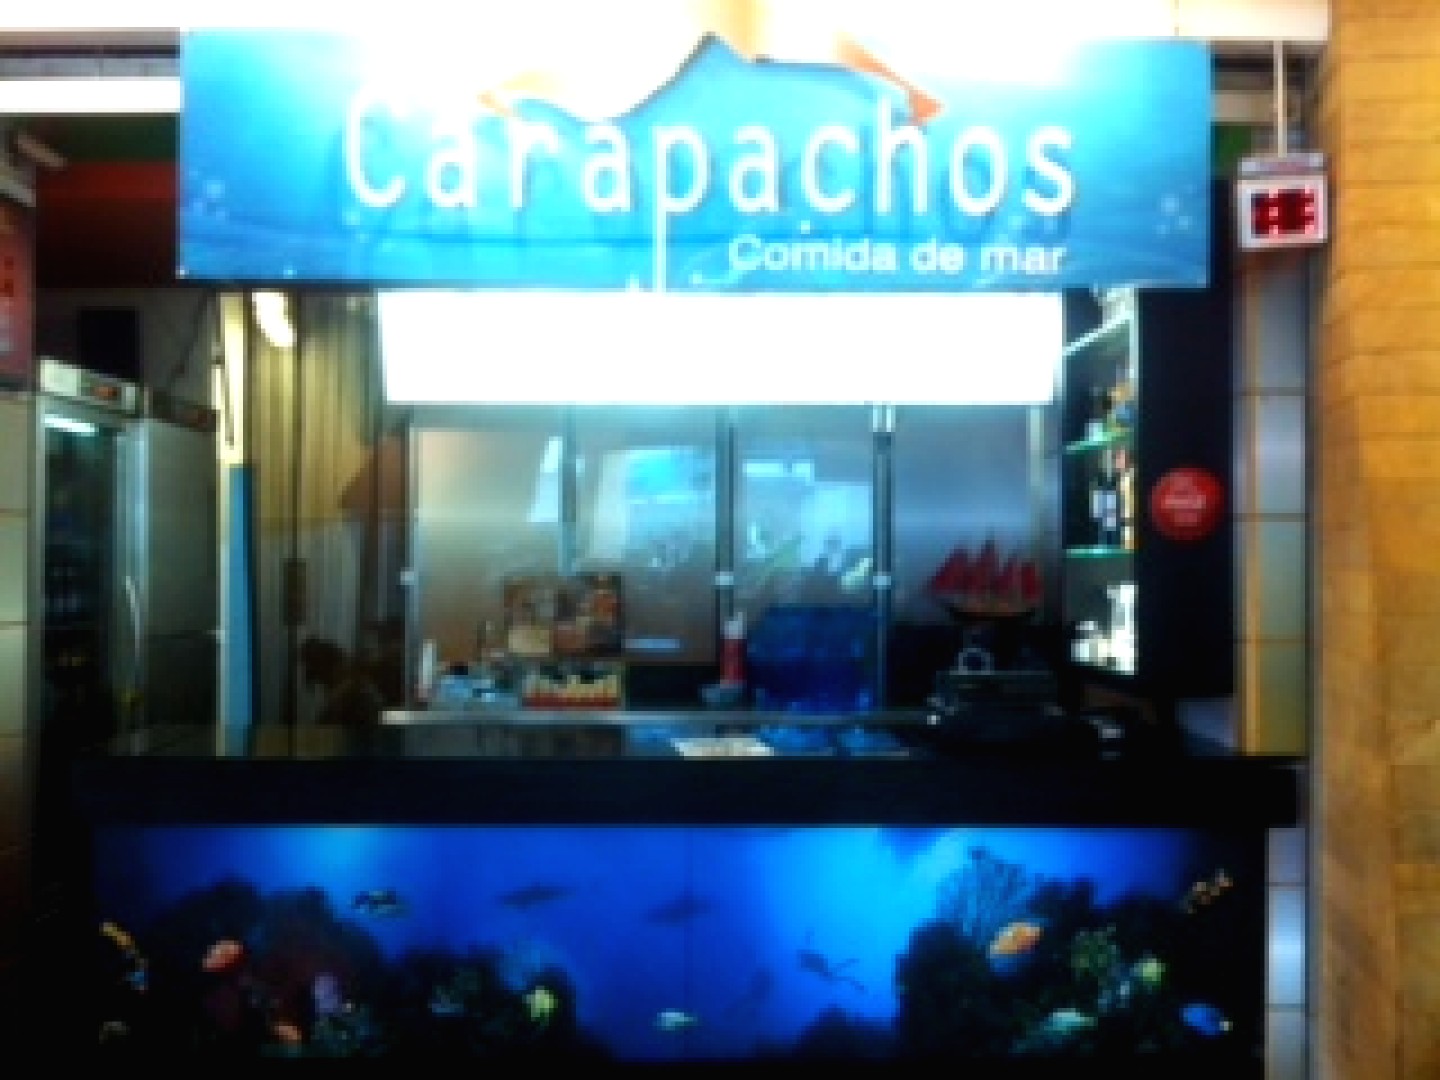 Carapachos